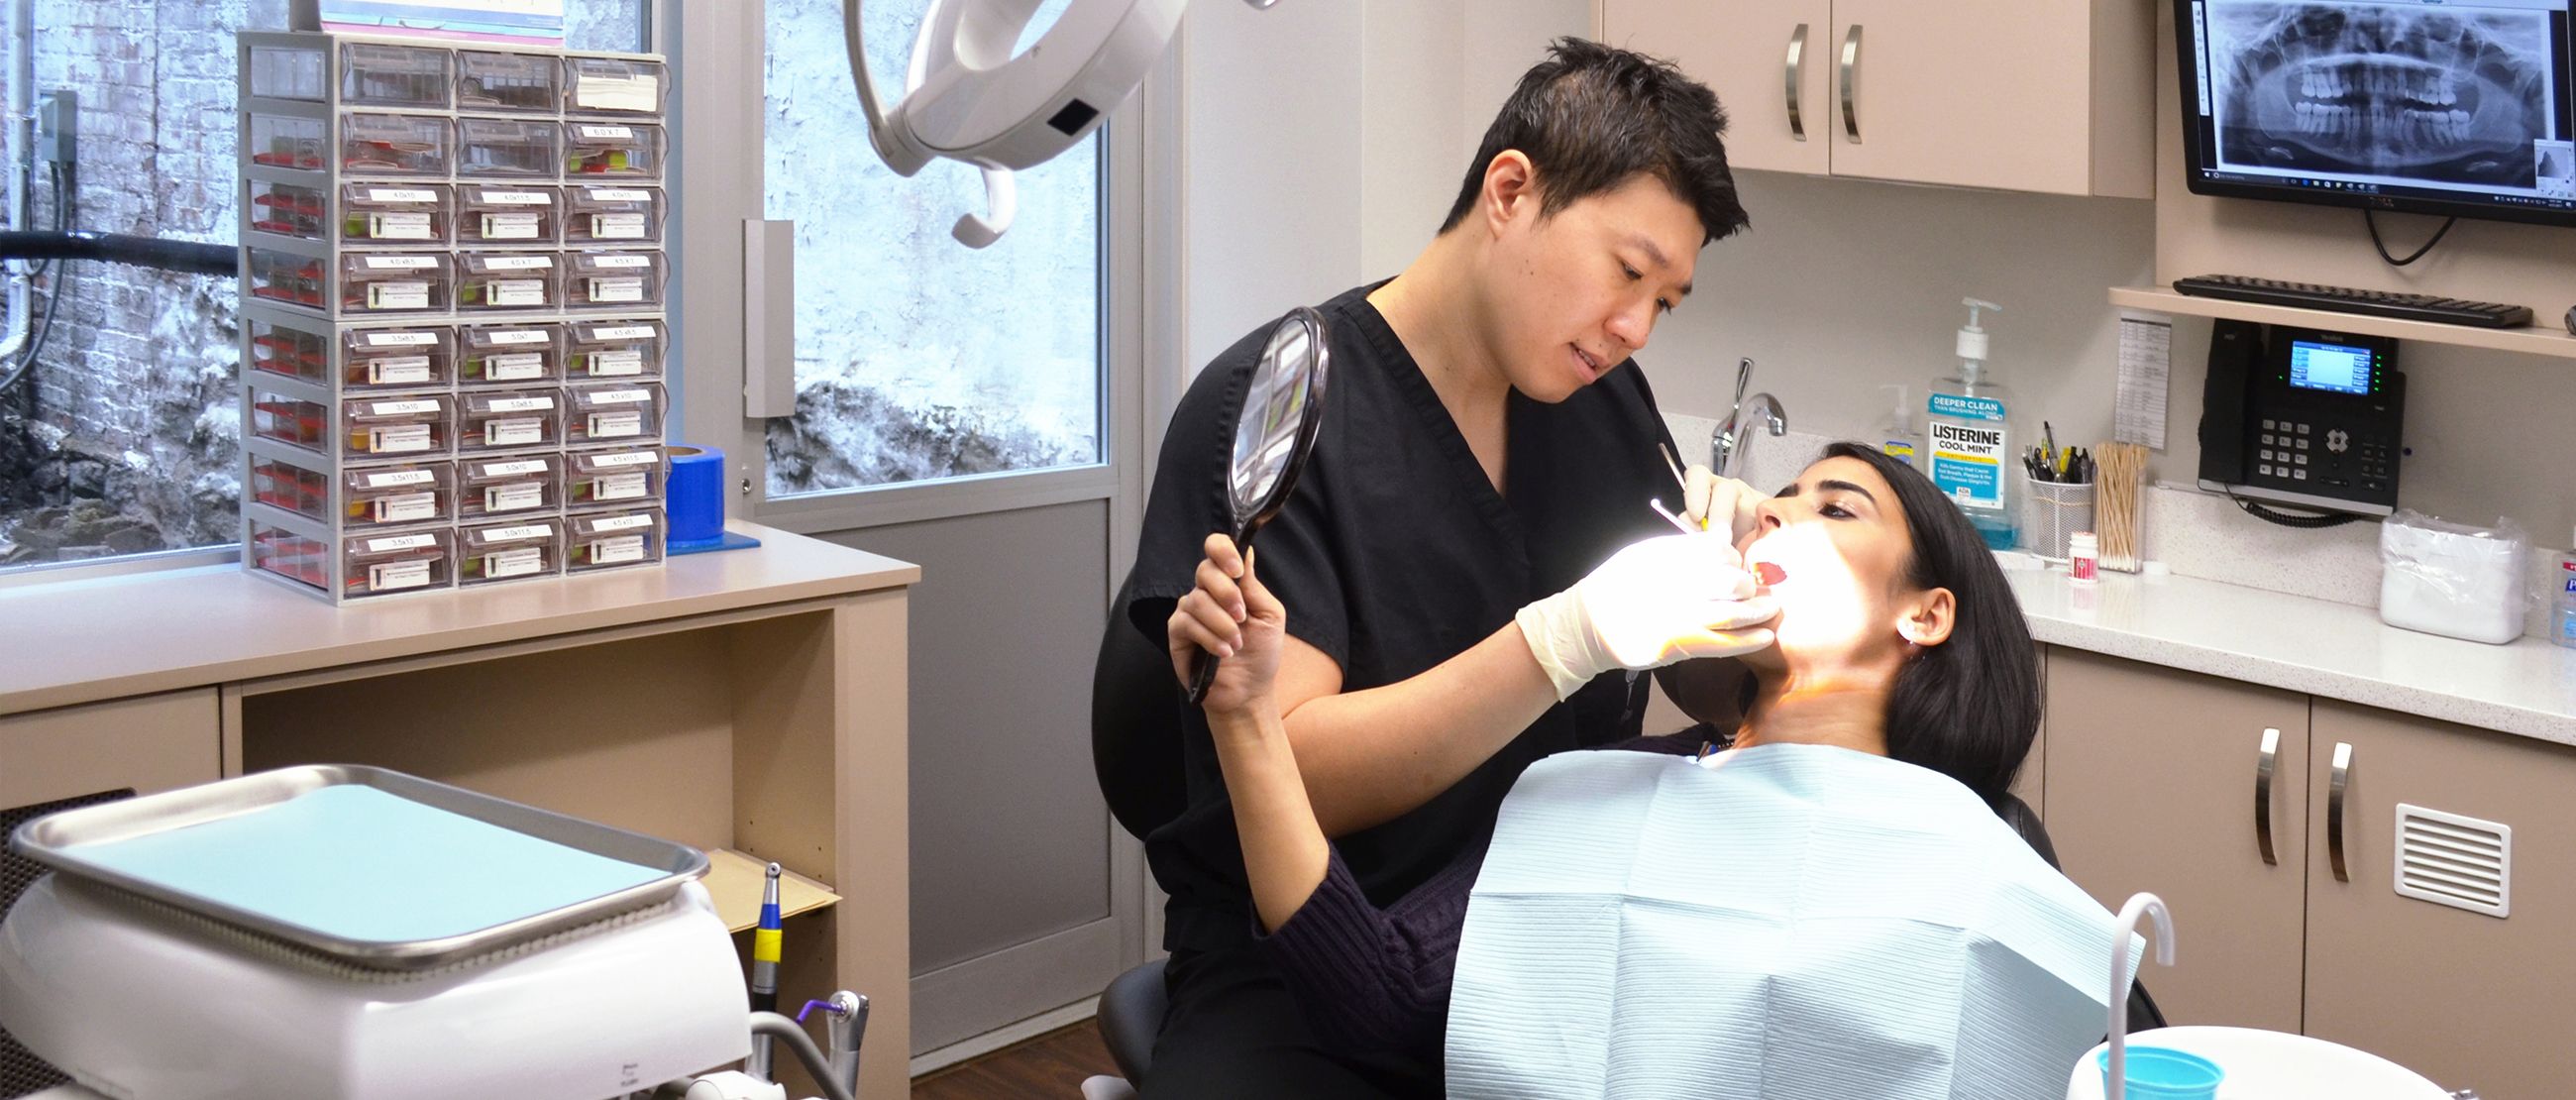 Emergency Dentist from 209 NYC Dental, proving emergency dental care in New York City